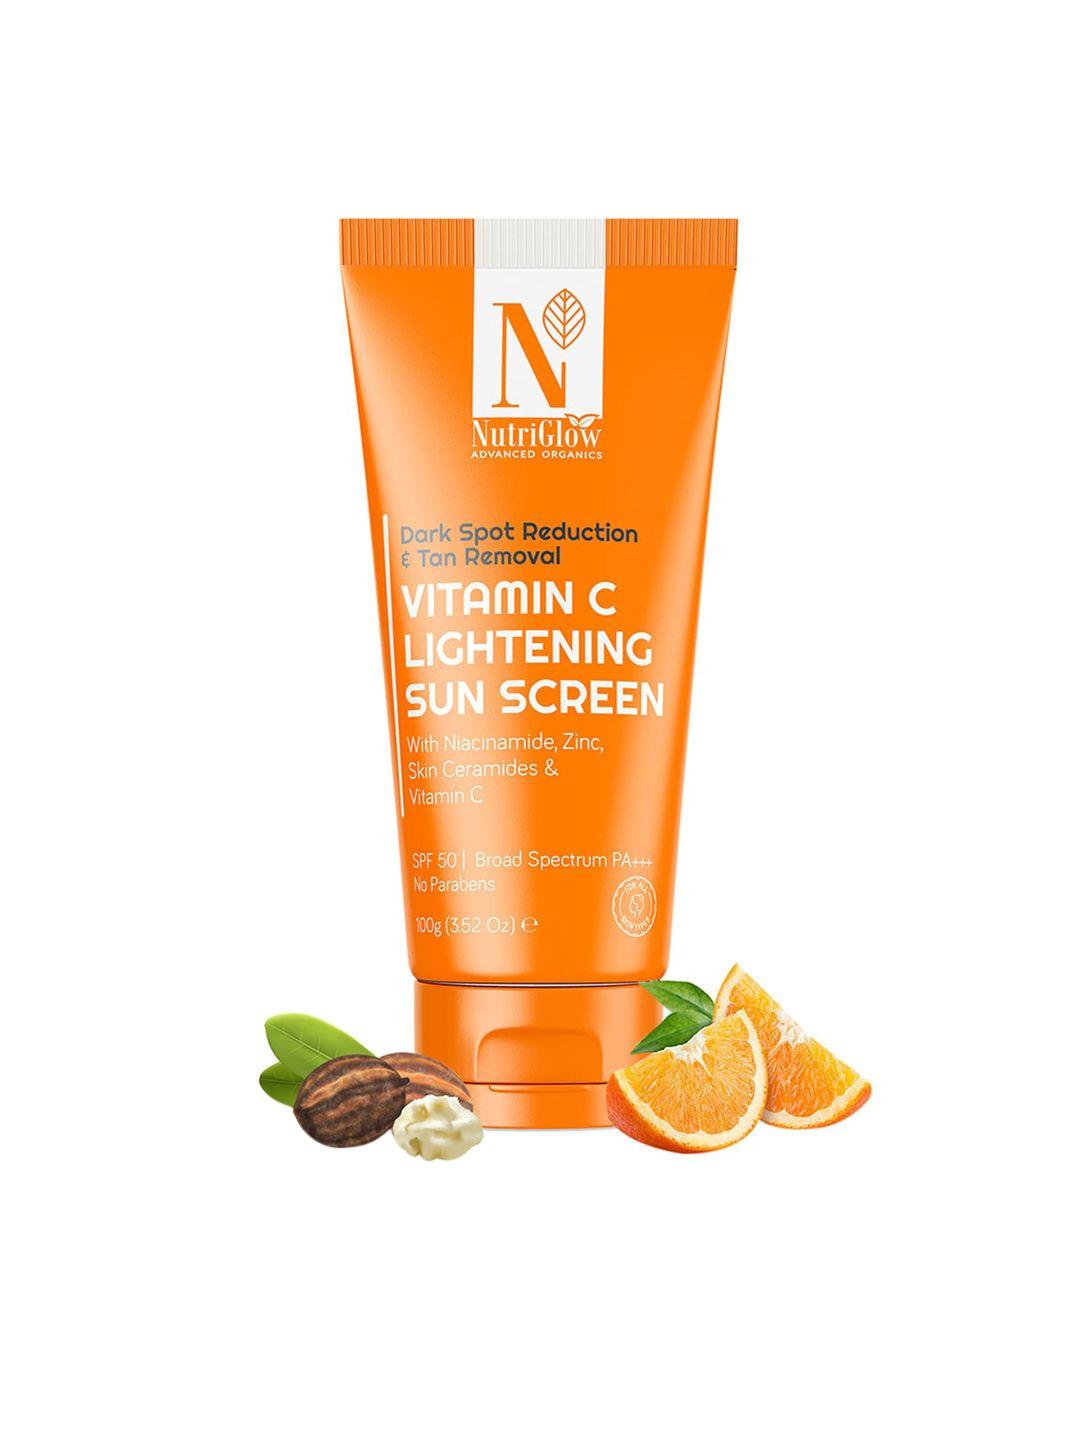 nutriglow advanced organics sustainablevitamin c lightening sunscreen spf50 pa+++ 100g